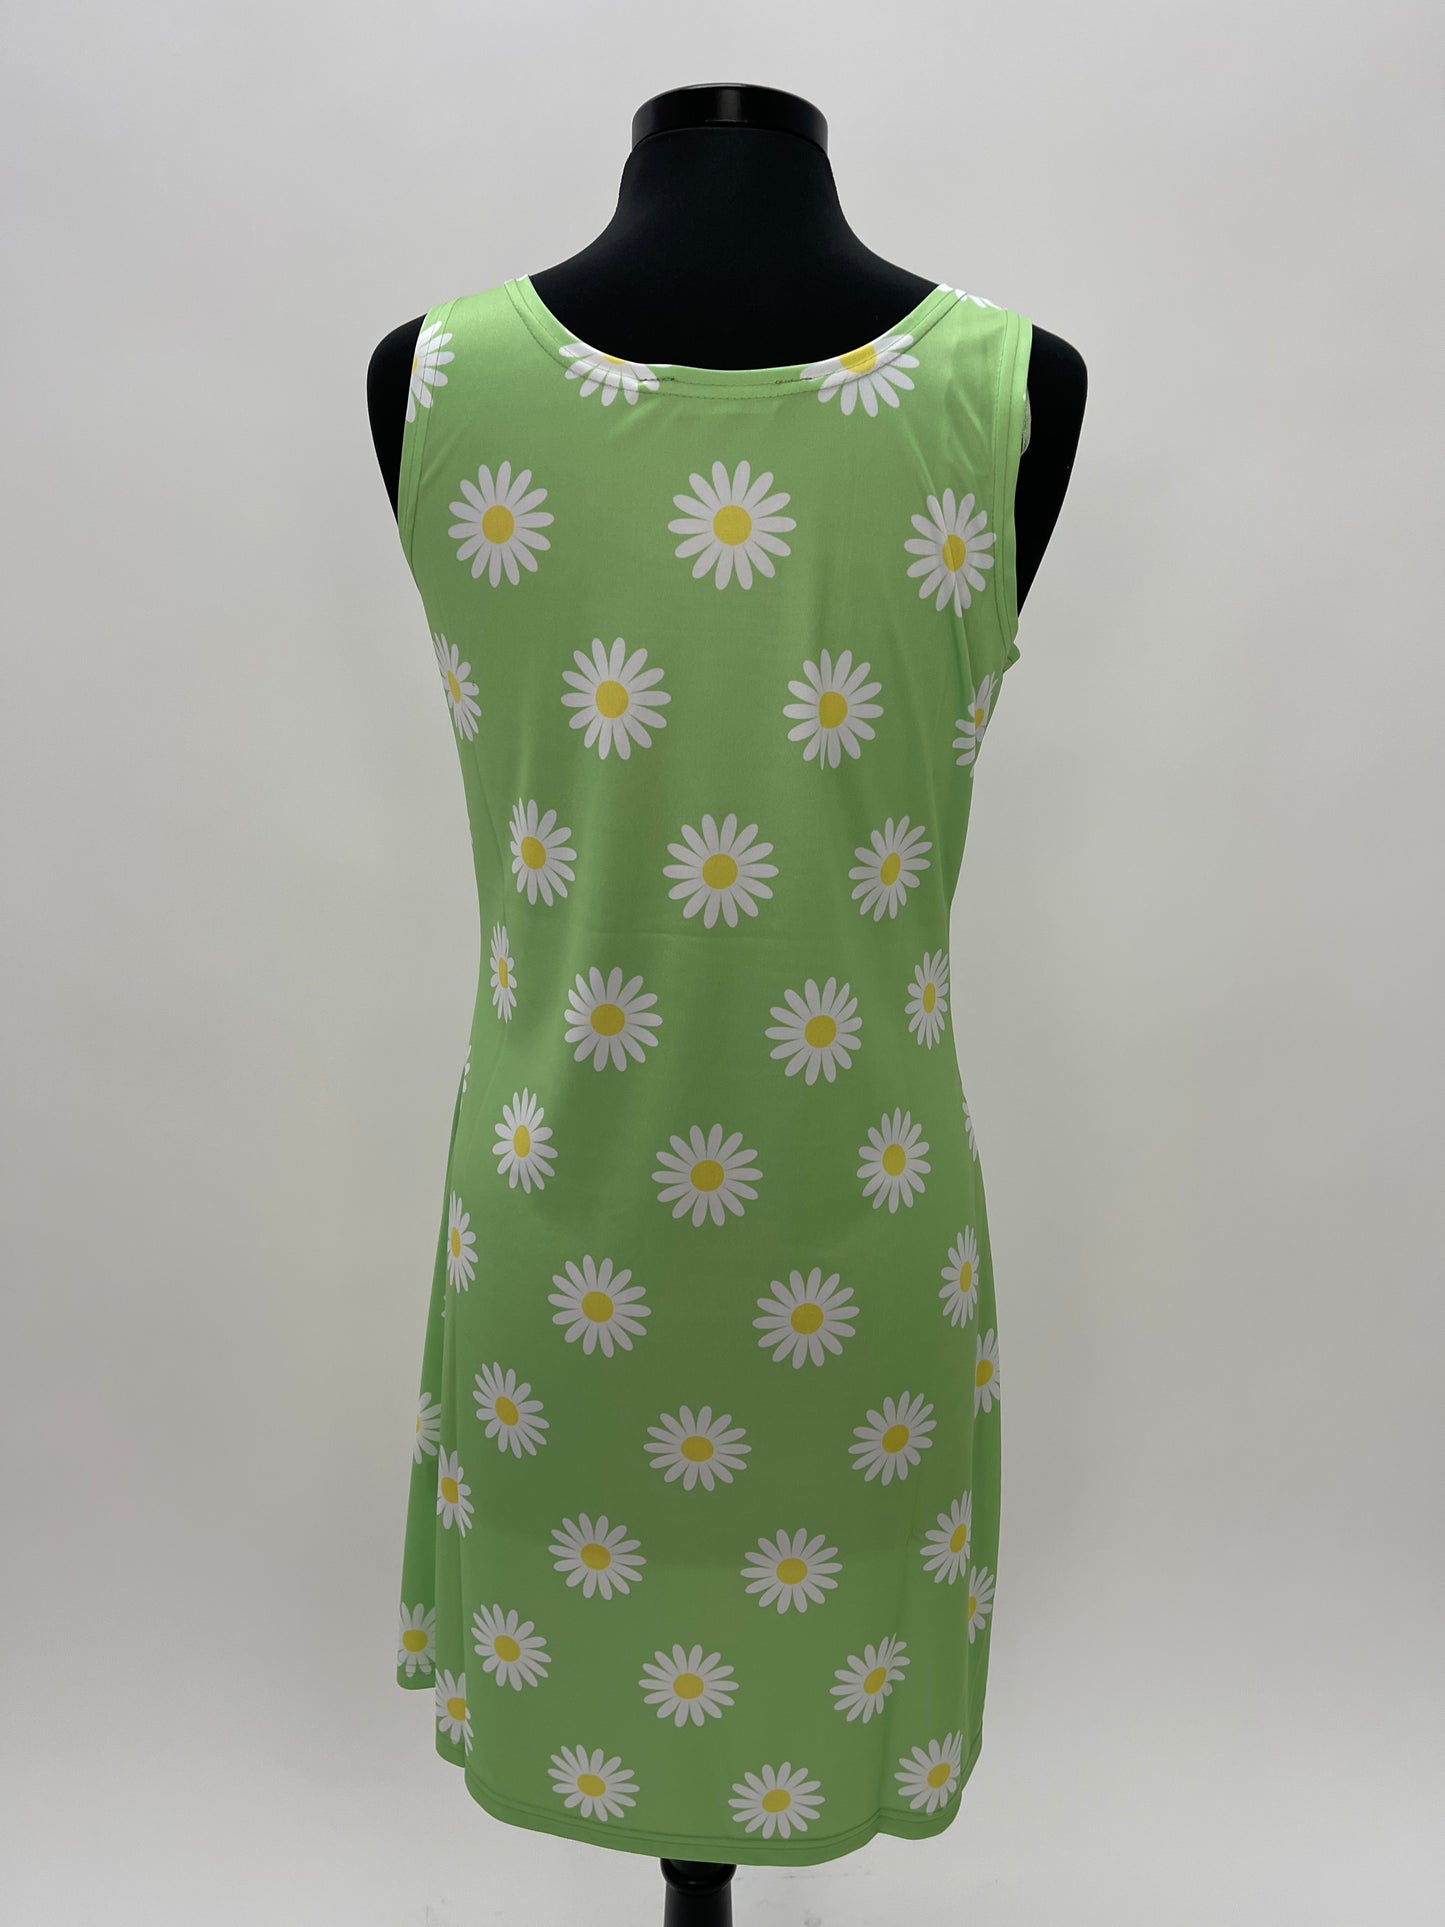 Daisy Green Scoop Neck Sleeveless Dress